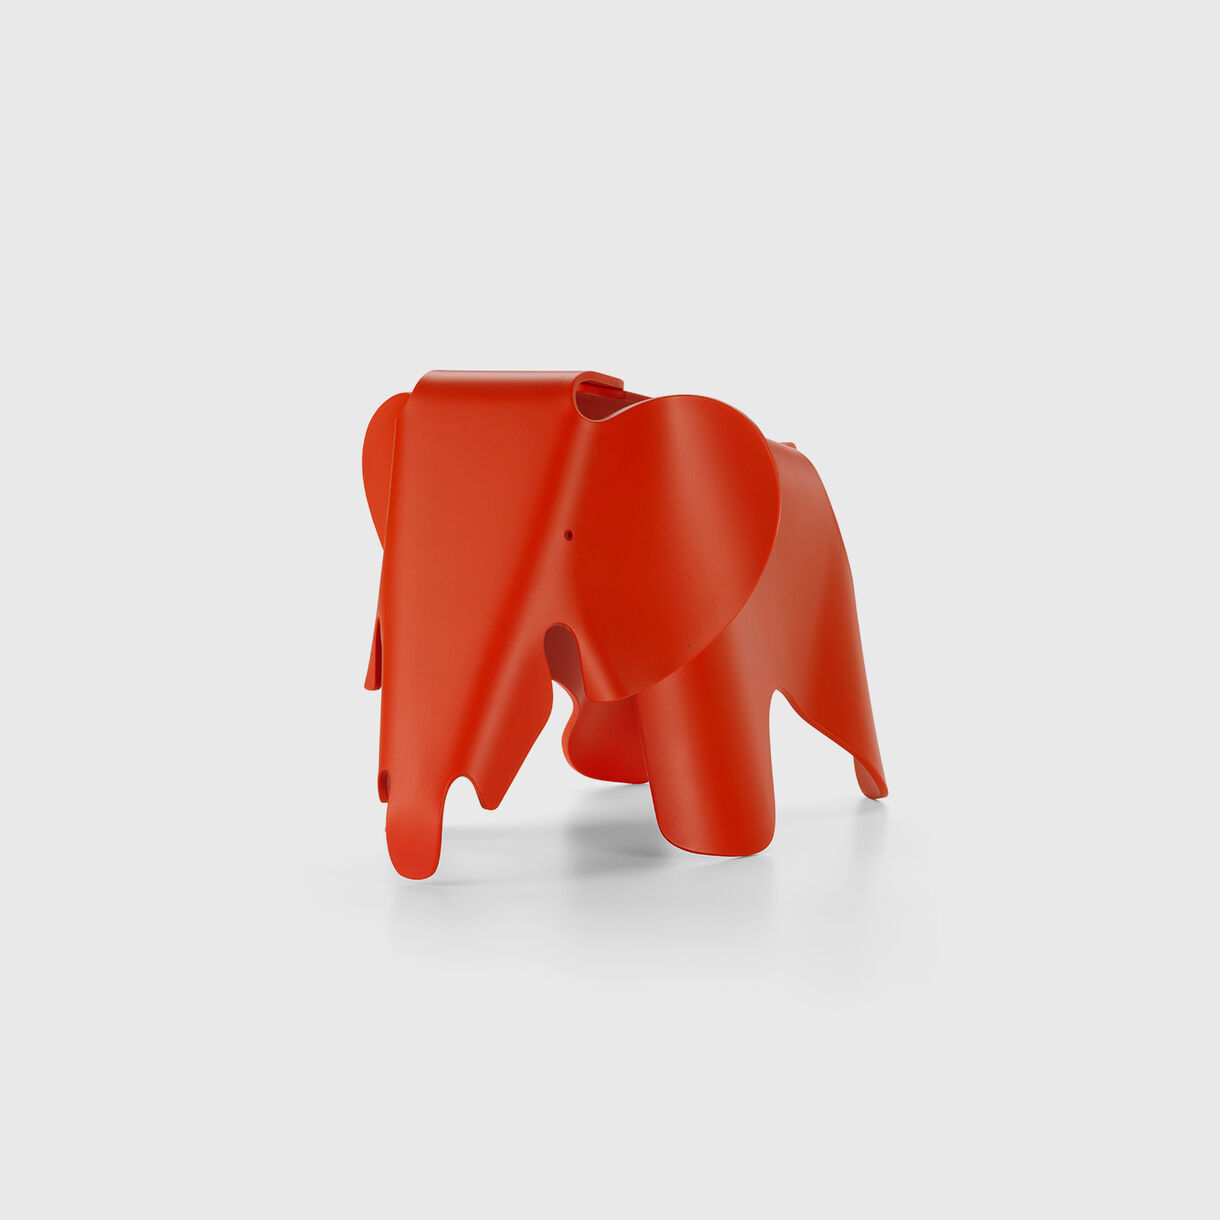 Eames Elephant Small, Poppy Red